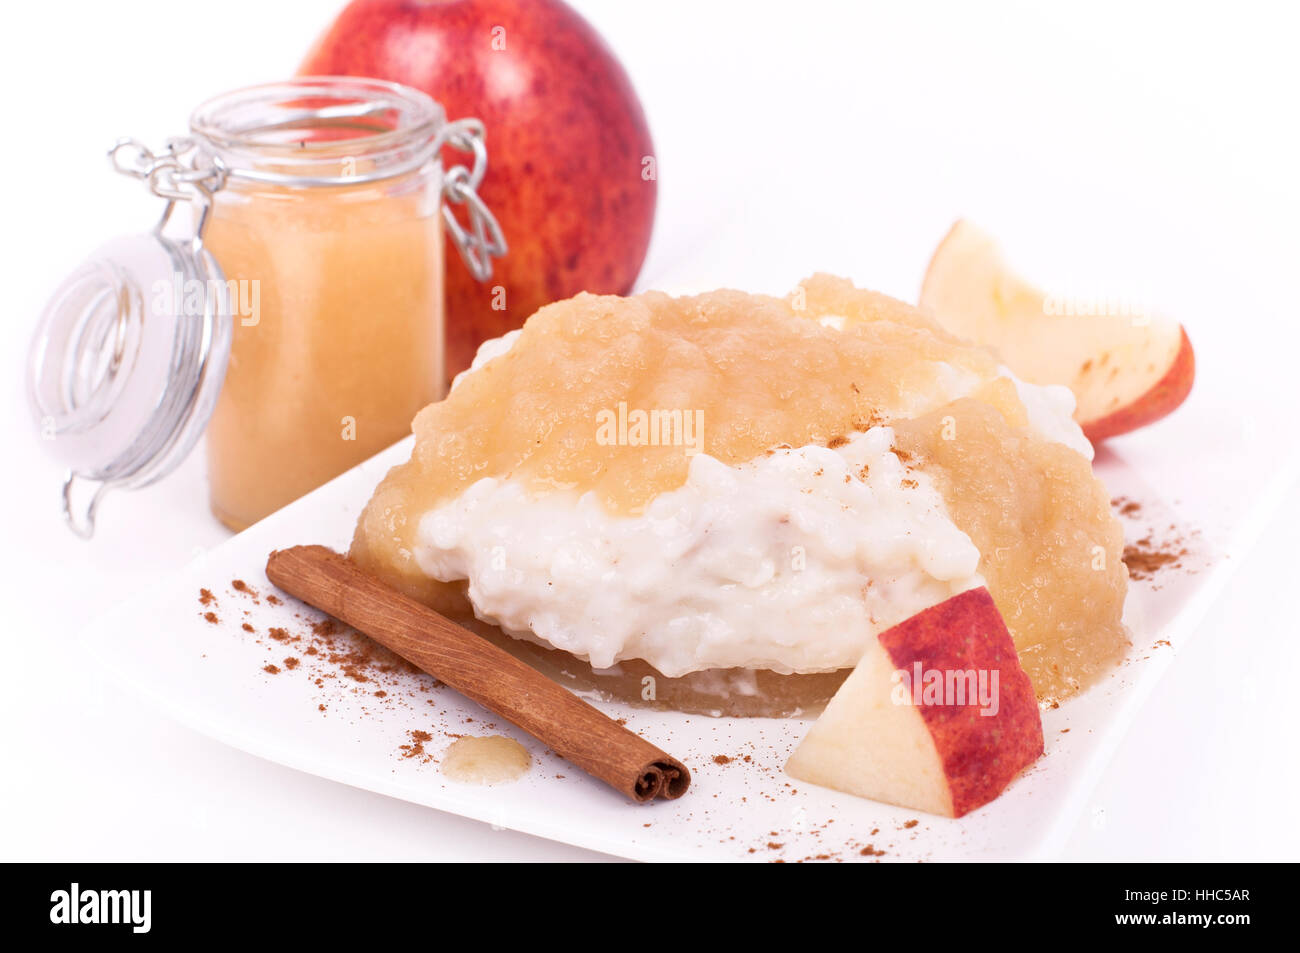 isolated, apples, apple, applesauce, cinnamon stick, rice pudding, dessert, Stock Photo